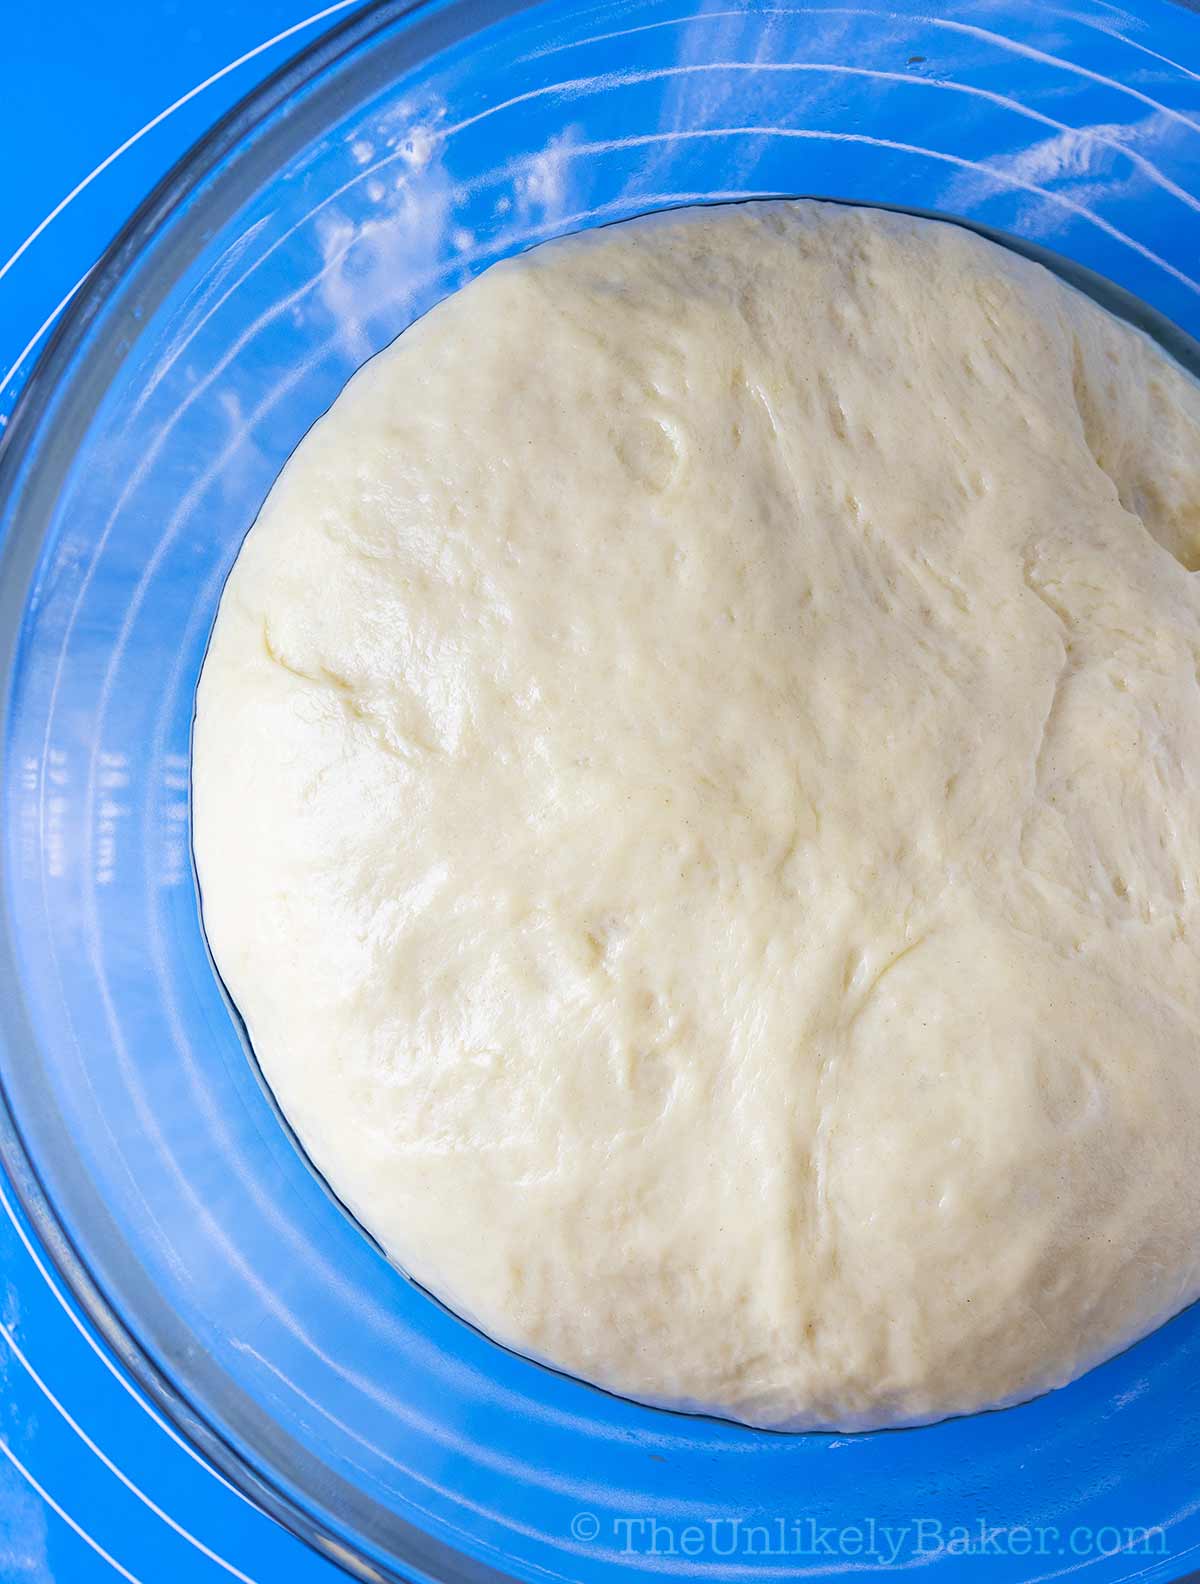 Bread dough risen to twice its size.